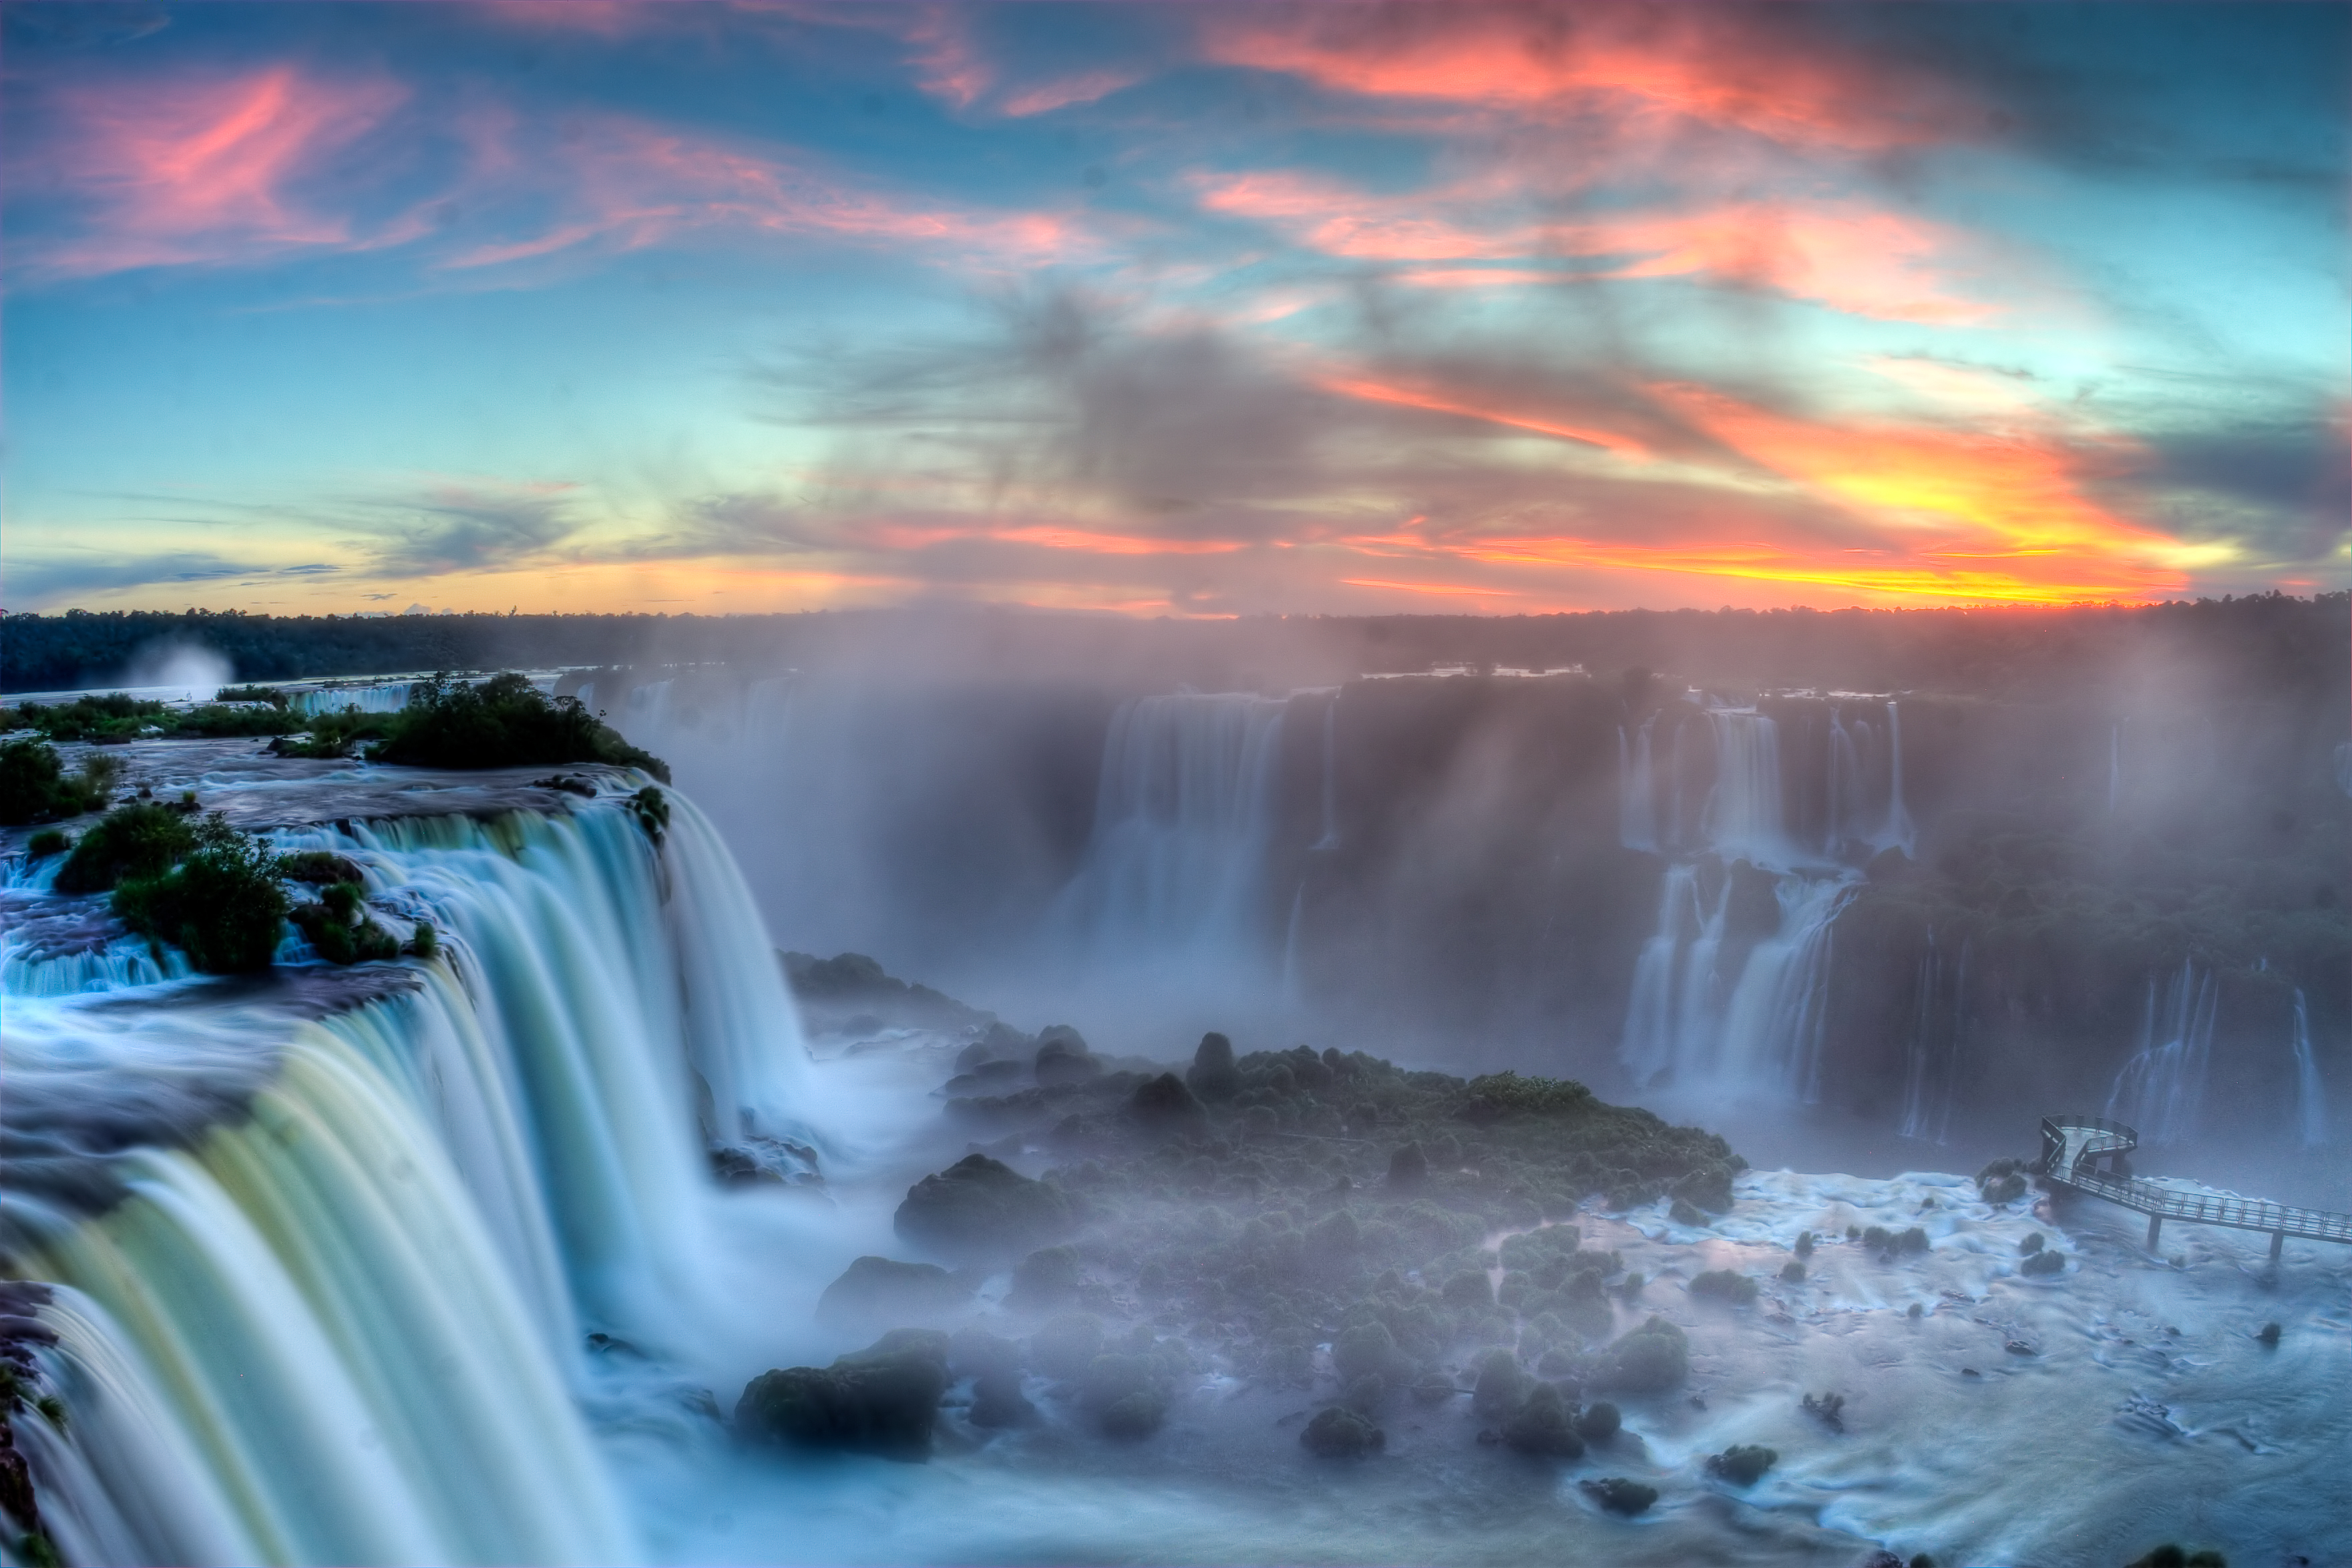 Cataratas del Iguazú | Wikimedia Commons